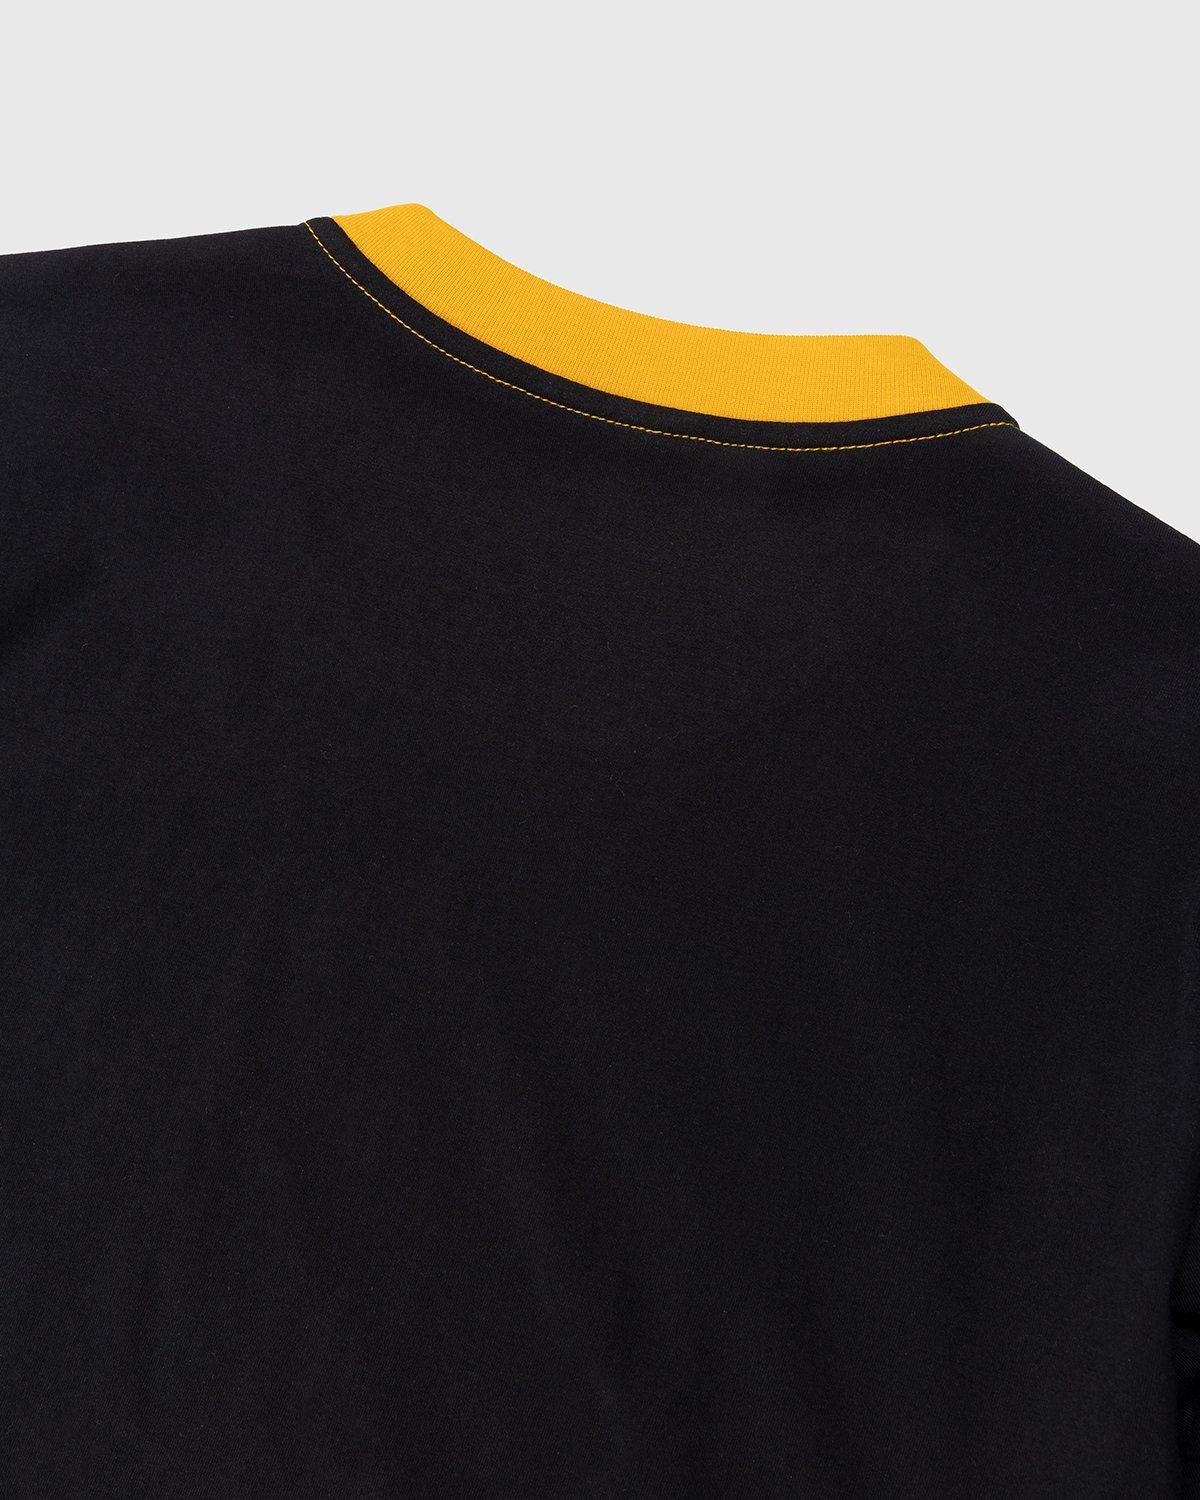 Marni – Stripe Logo Bio Jersey T-Shirt Black/Gold - T-Shirts - Yellow - Image 3